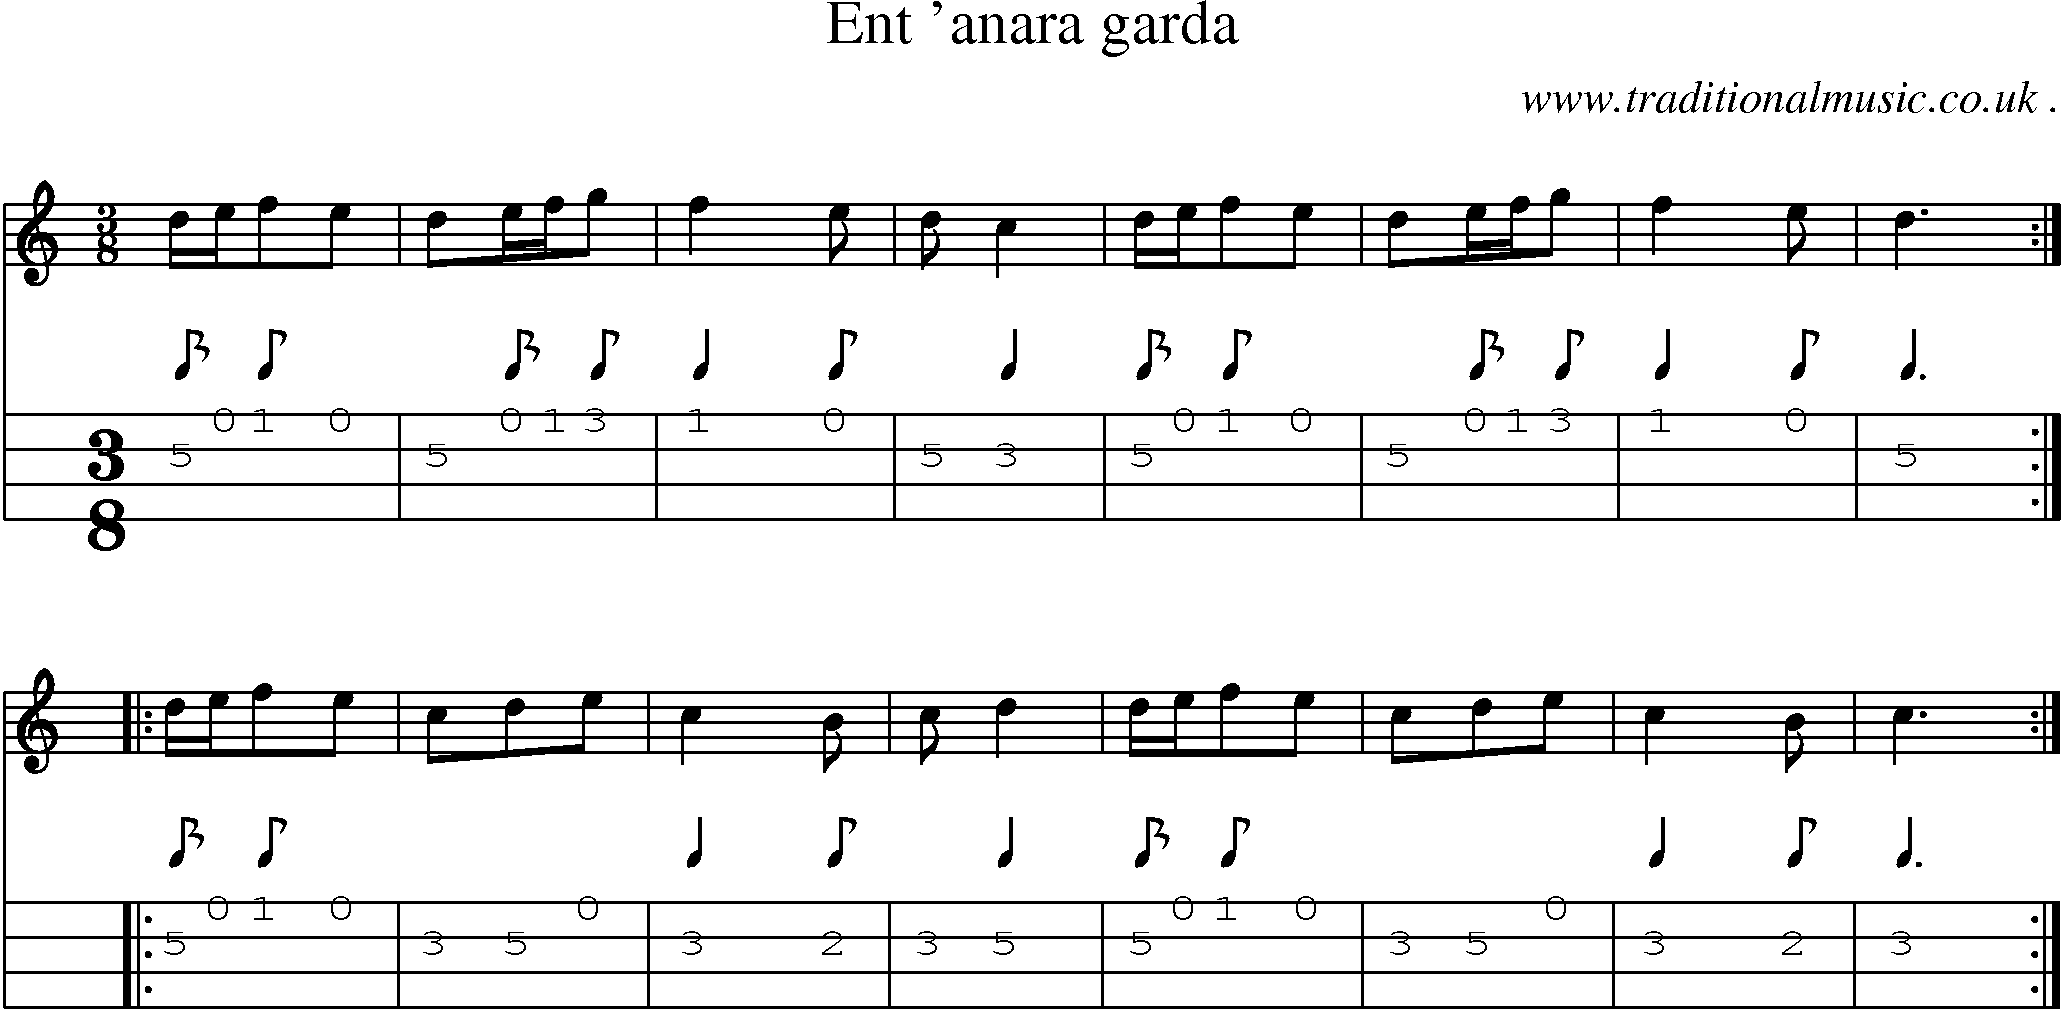 Sheet-Music and Mandolin Tabs for Ent Anara Garda